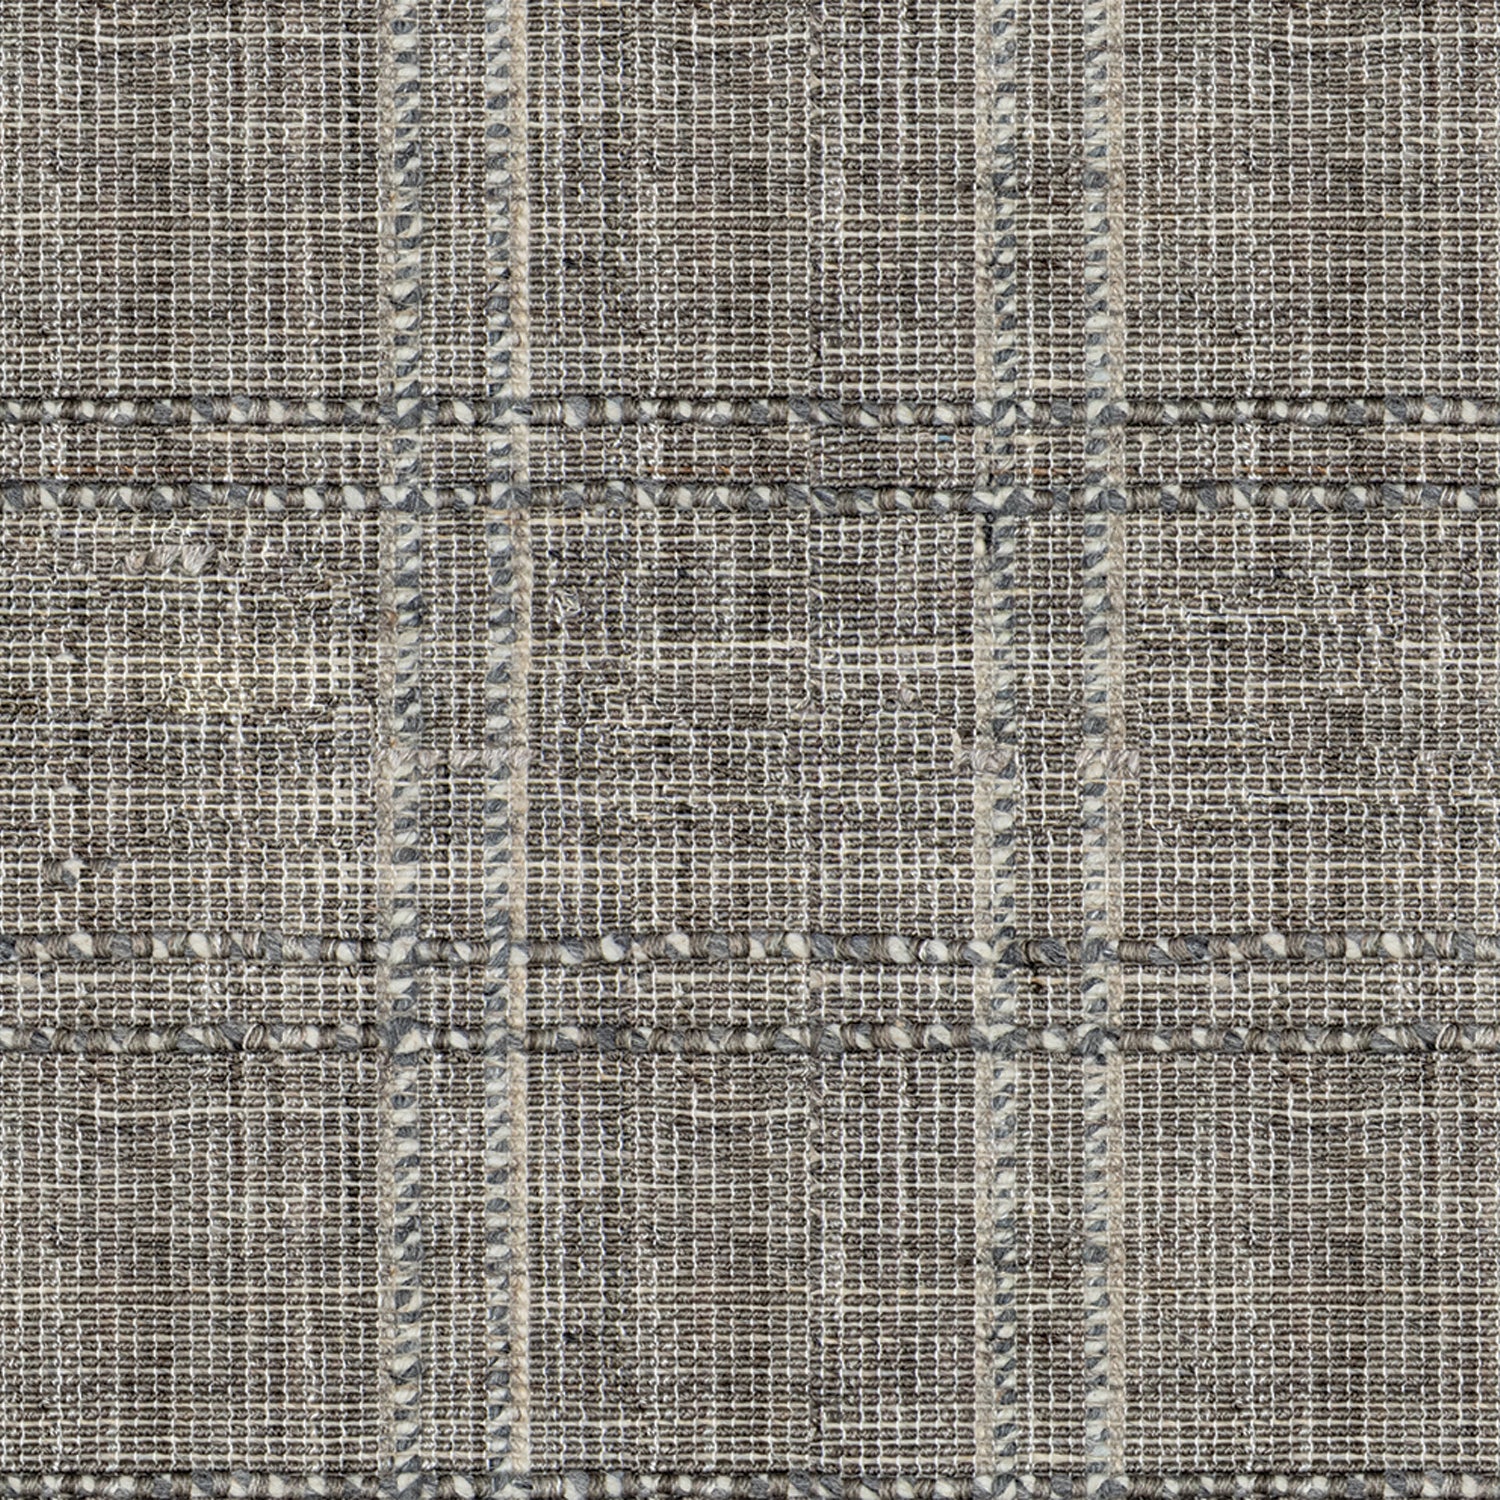 Wool-blend broadloom carpet swatch in a plaid tweed weave in silver and gray.